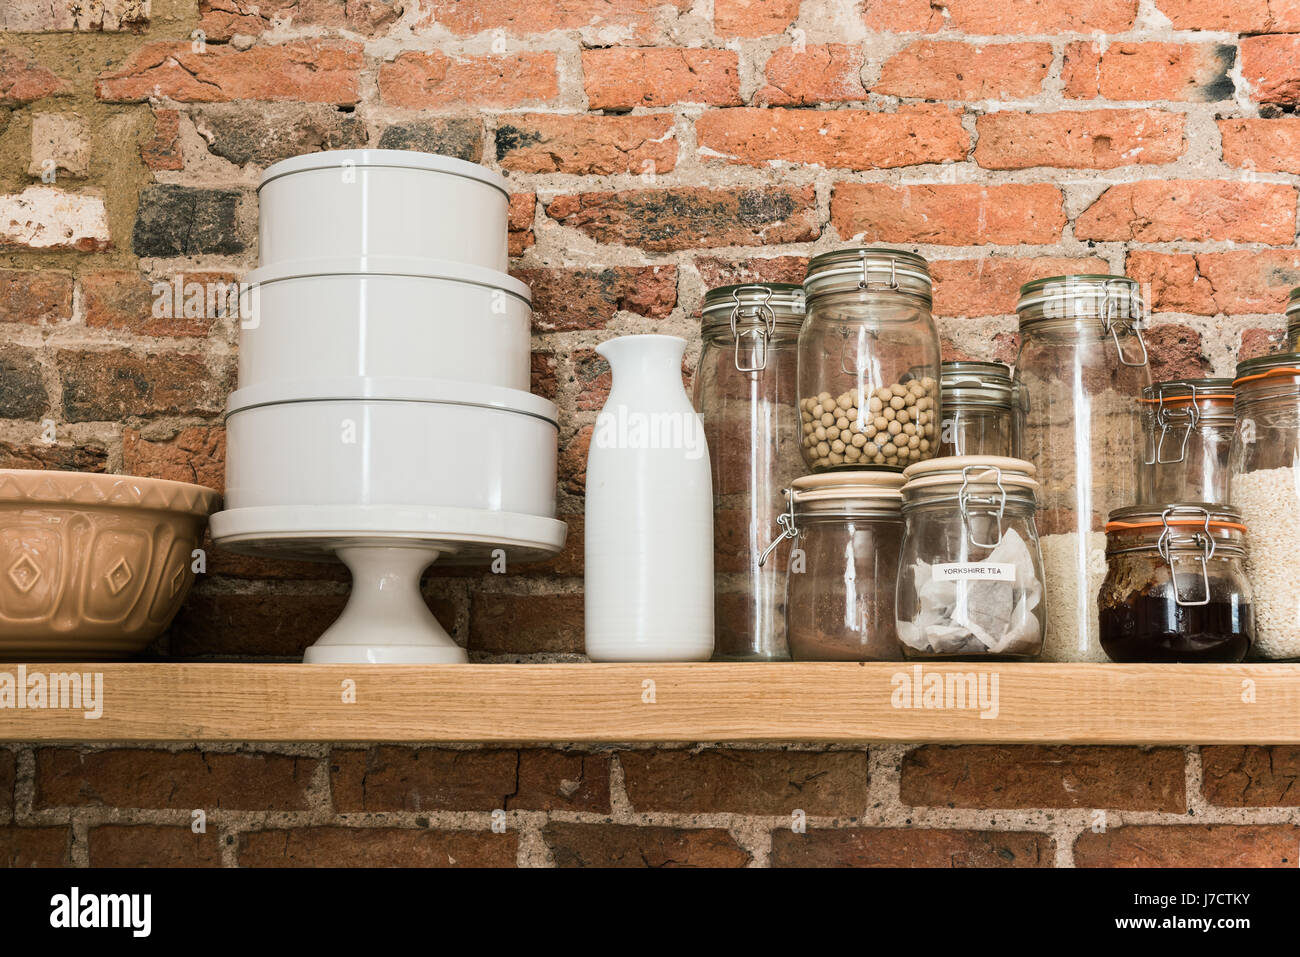 Kilner jars and cake tins on shelf against exposed brick wall Stock Photo